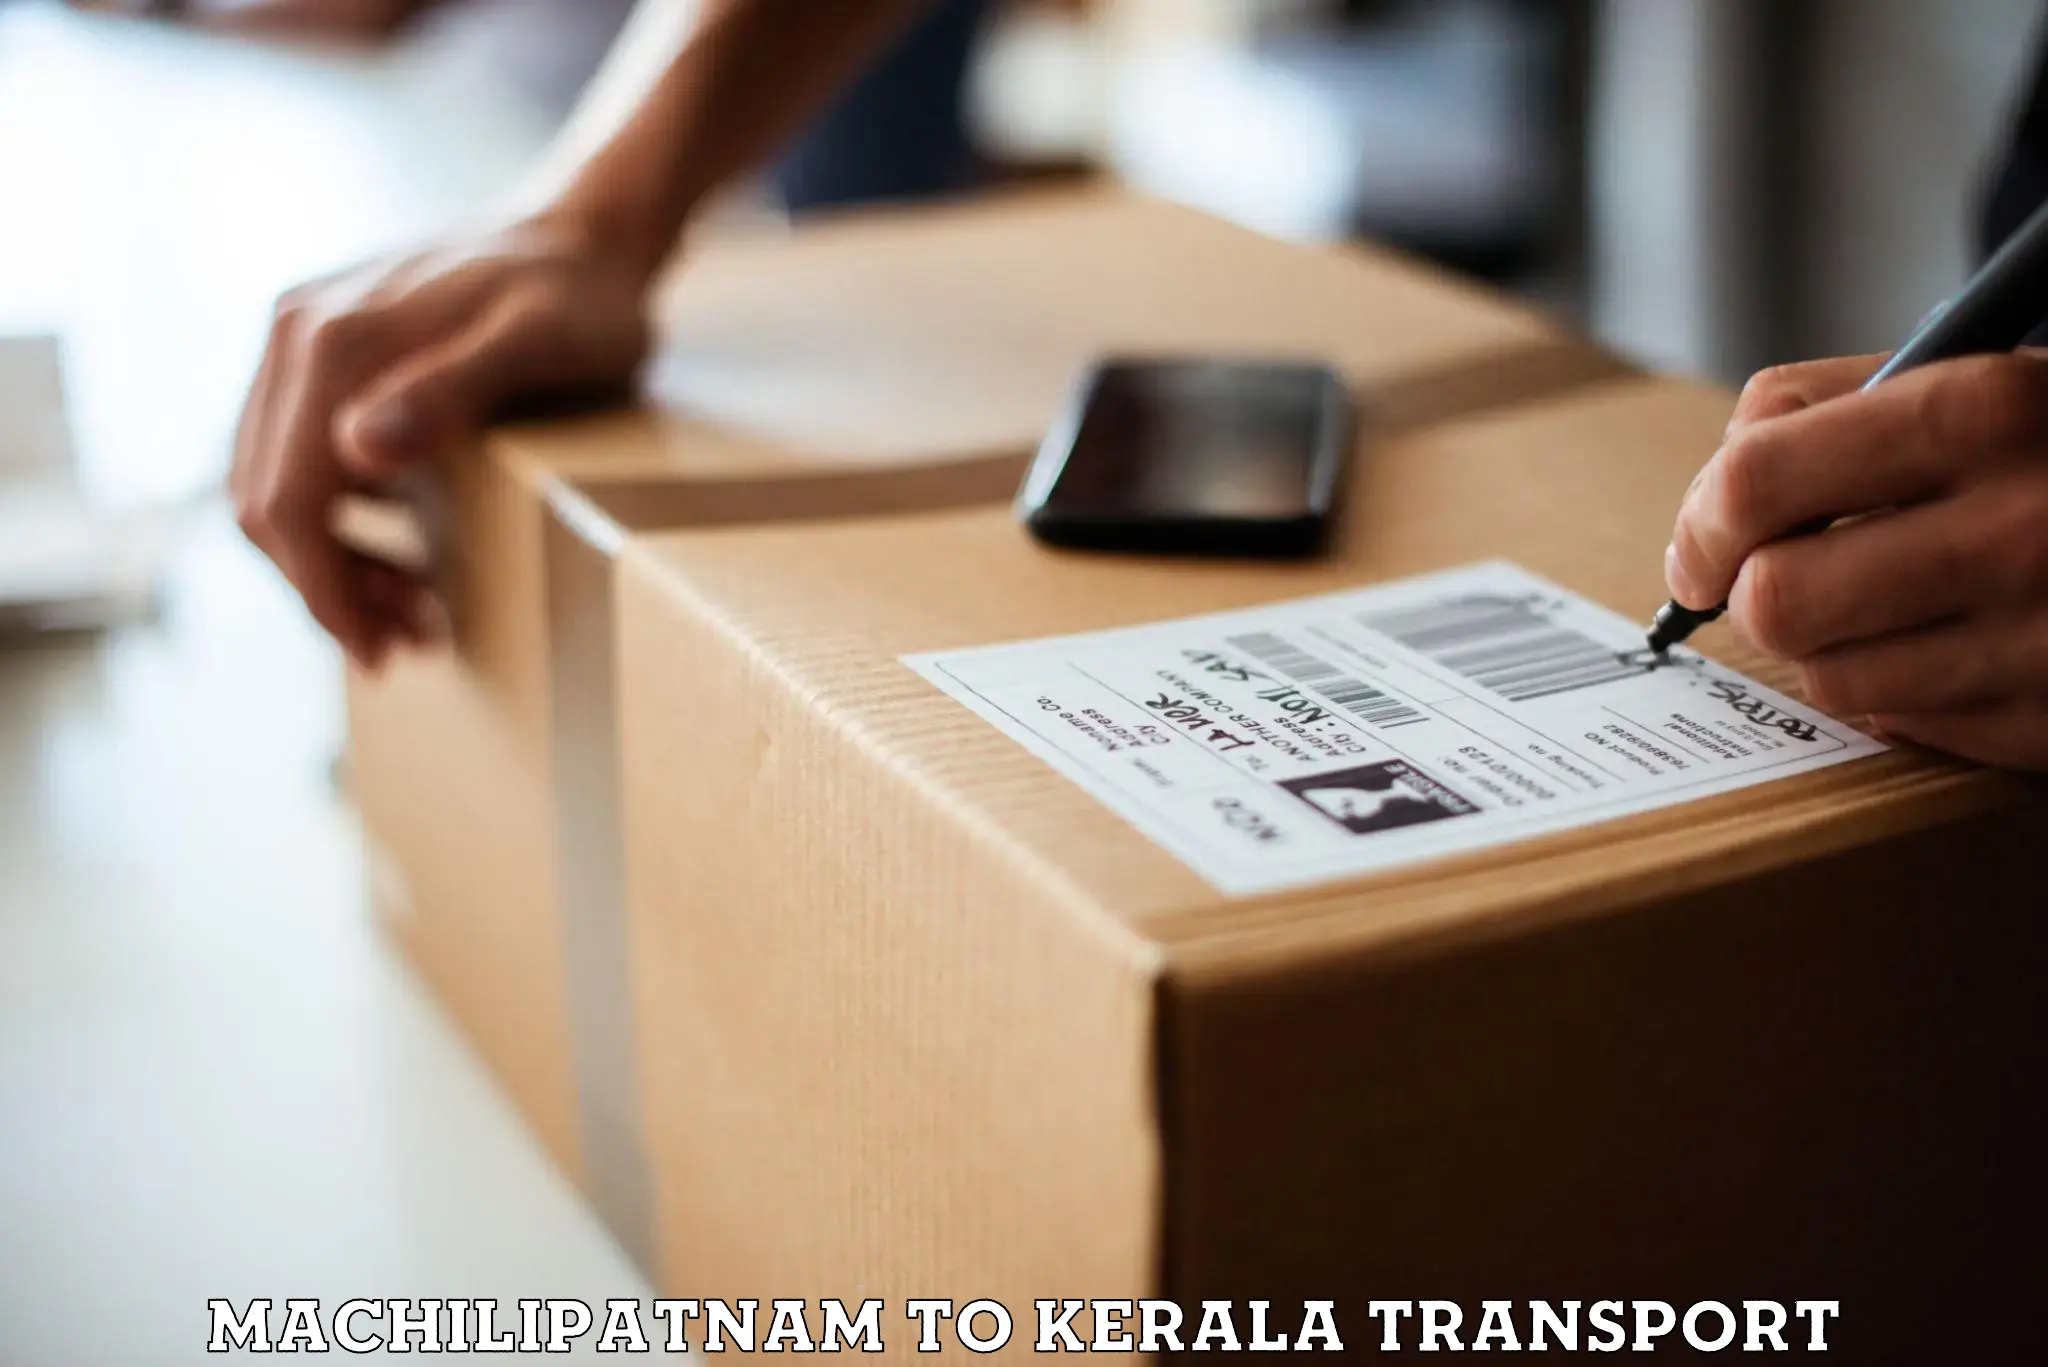 Delivery service Machilipatnam to Kochi